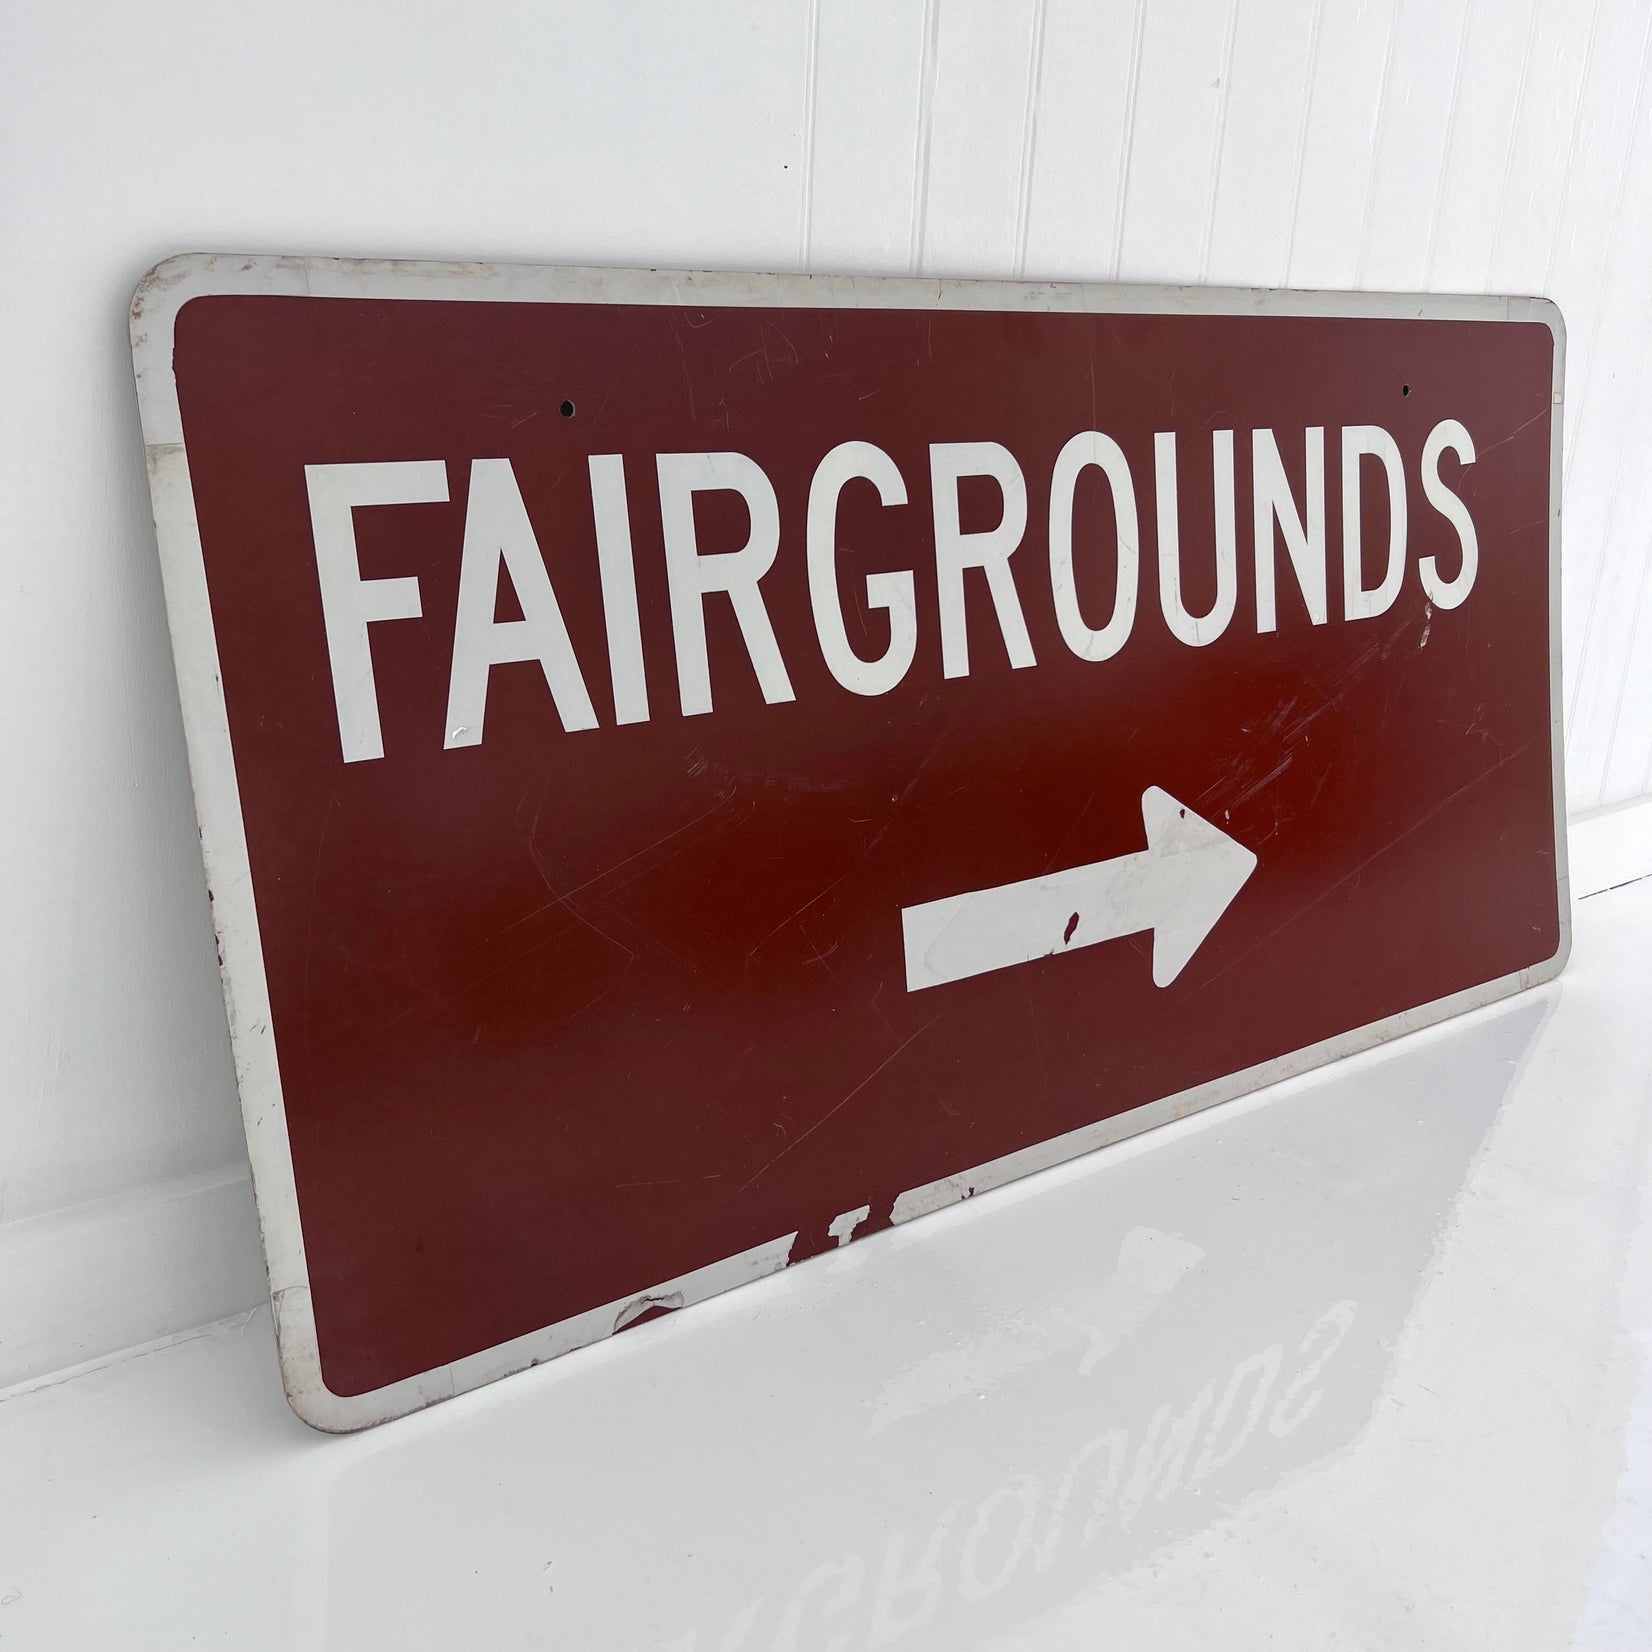 Fairgrounds Sign, 1980s USA